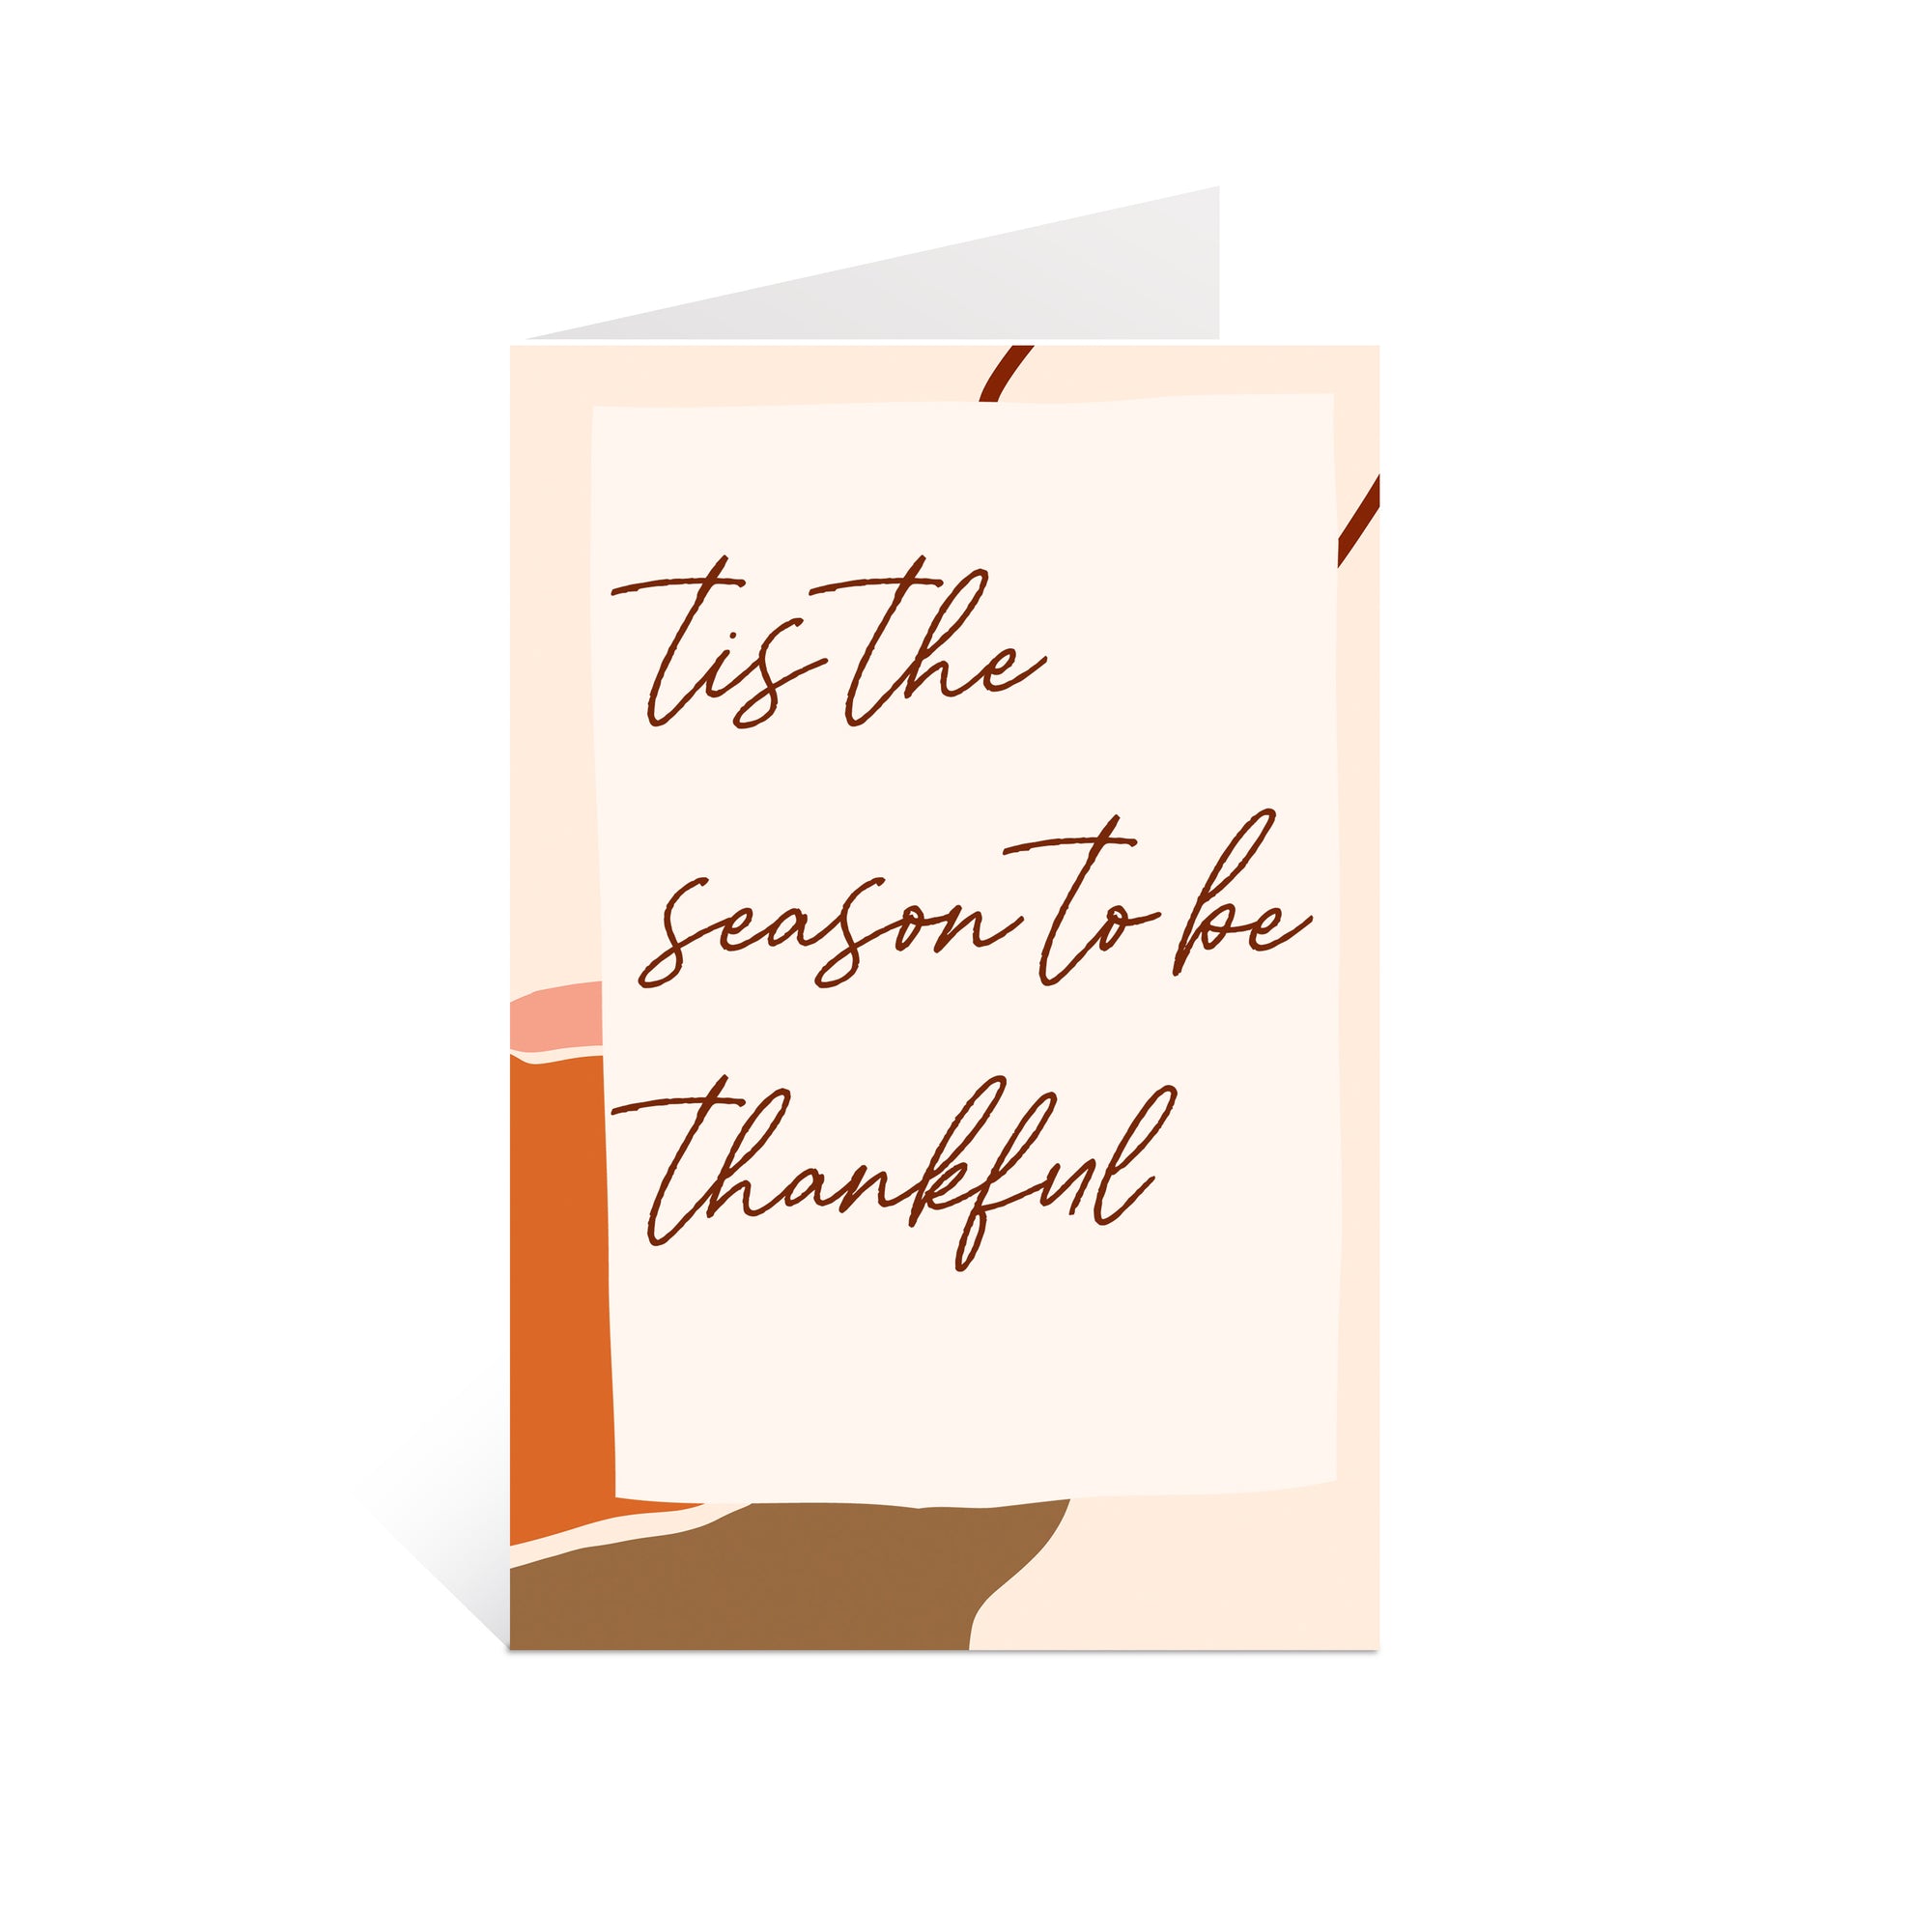 "Tis the Seasonl" Greeting Card